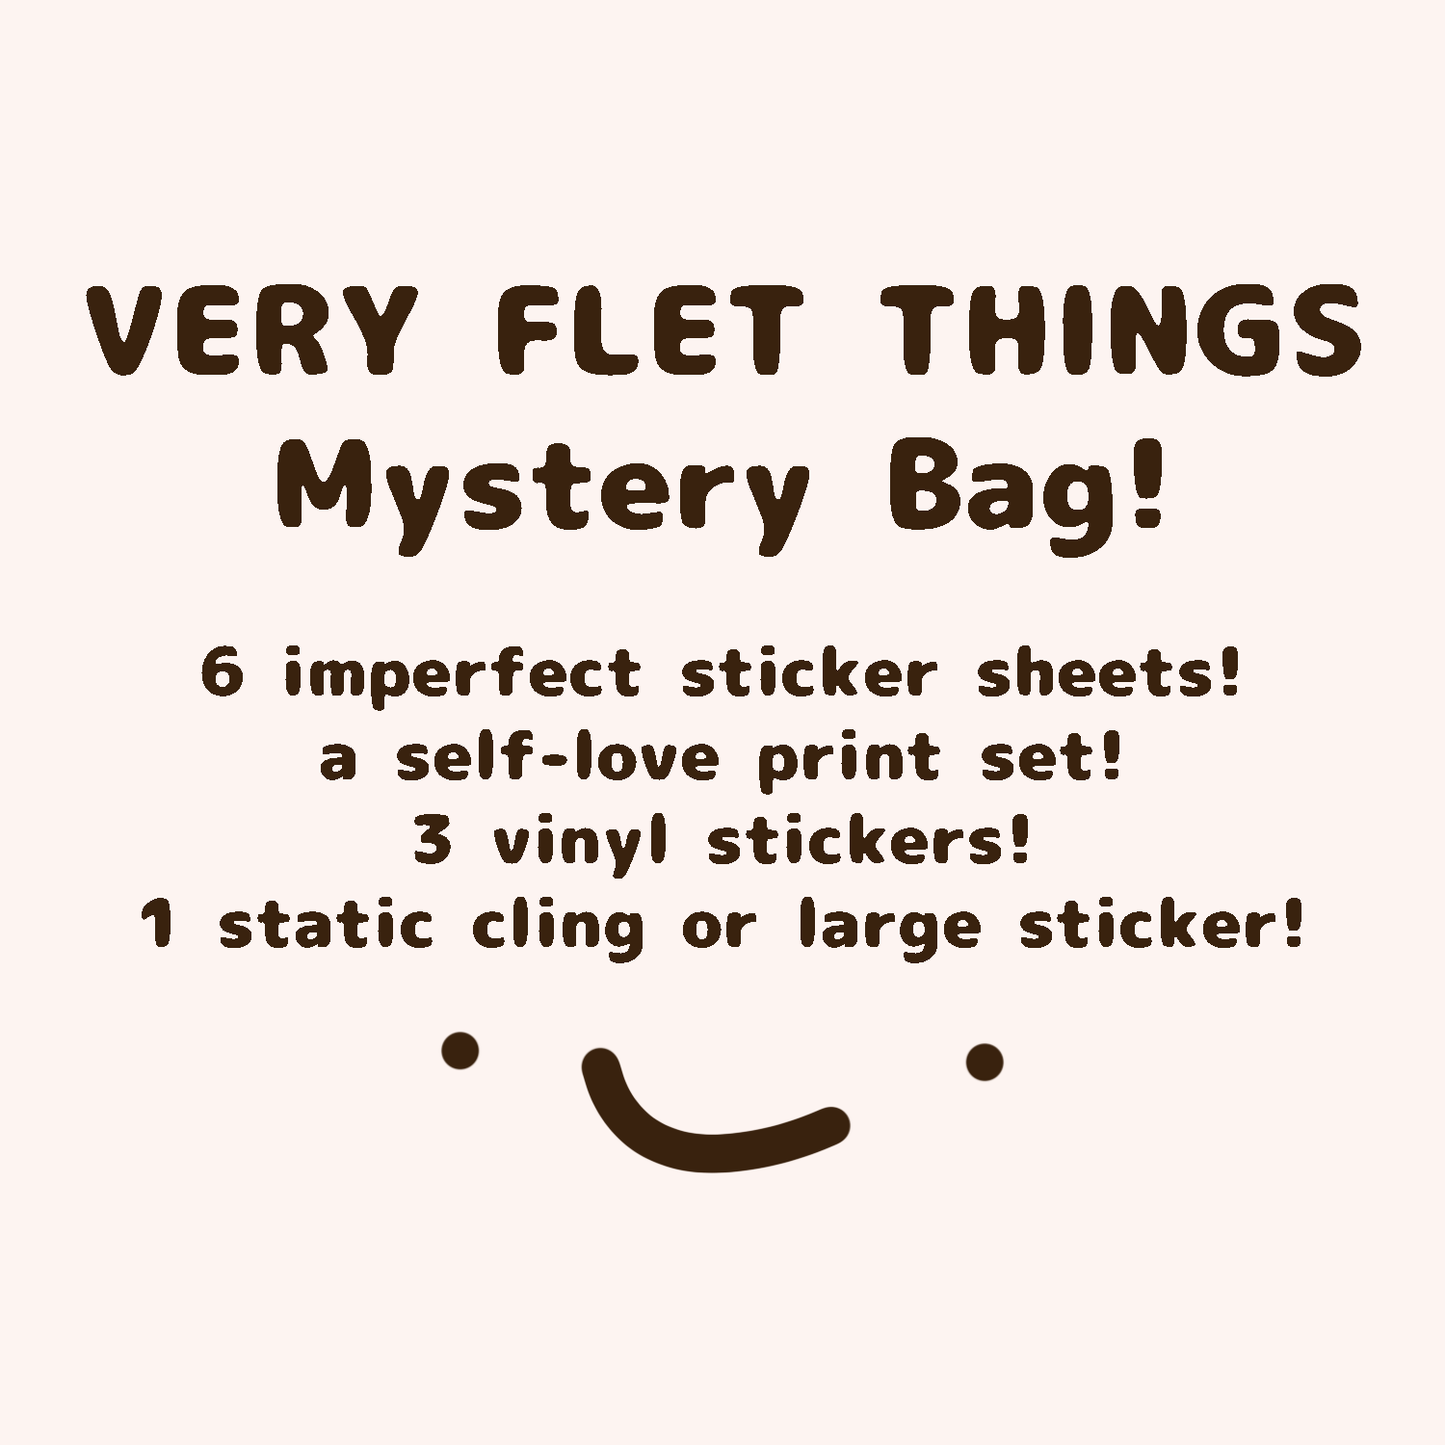 VERY FLET THINGS Mystery Bag